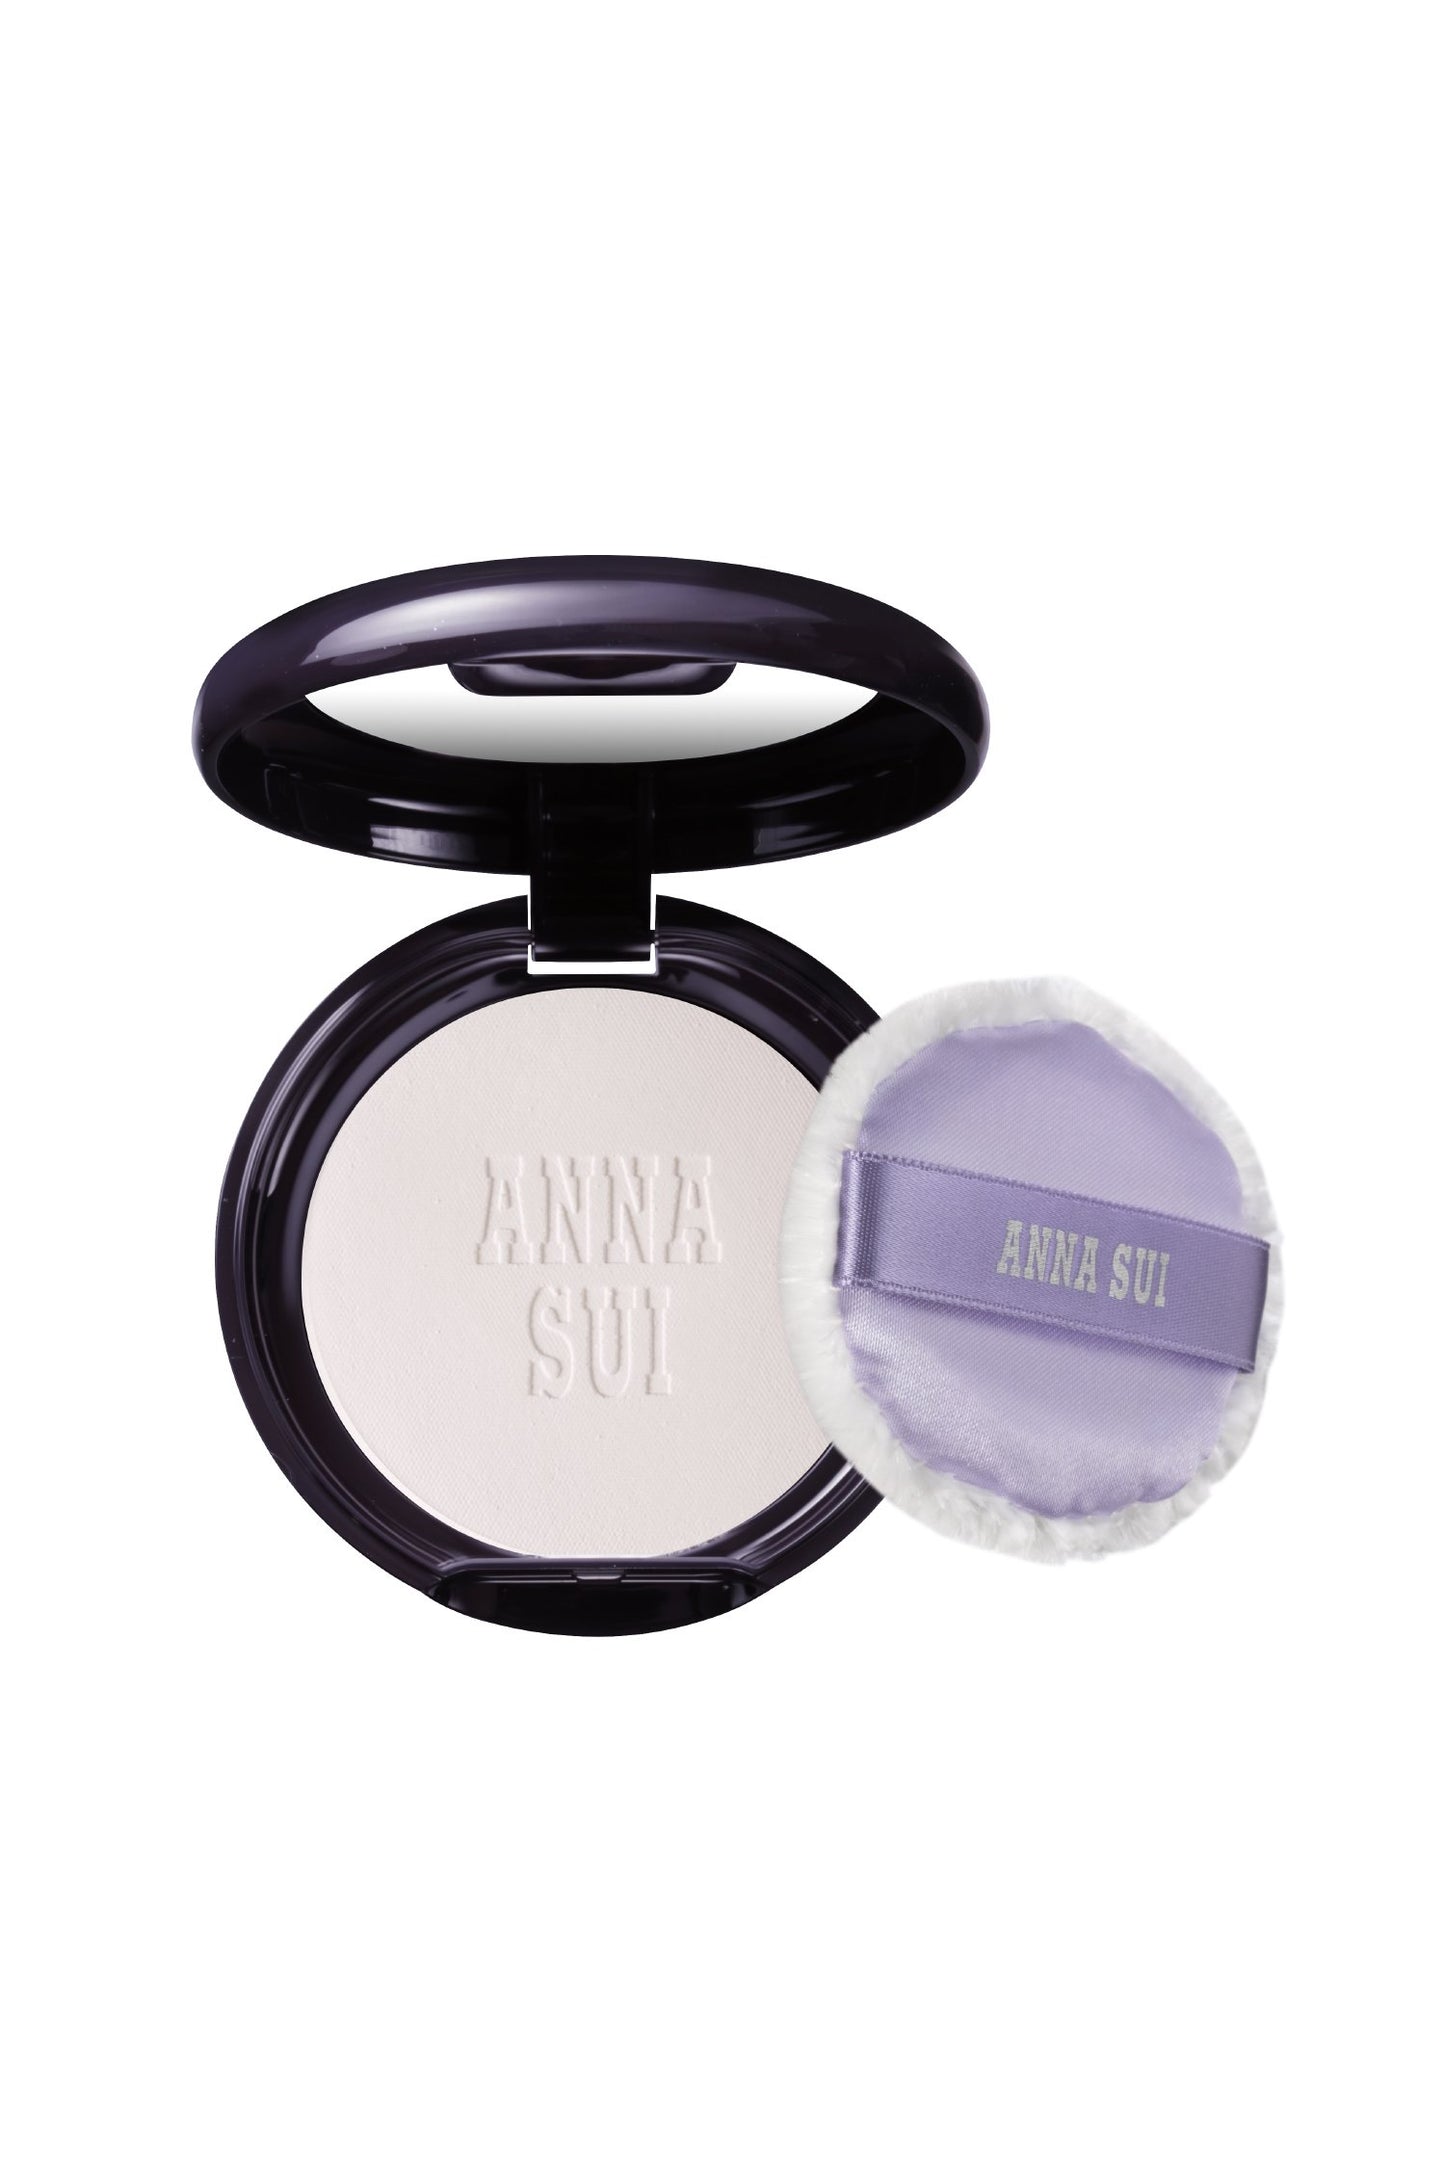 New skin-brightening powder, round case with a mirror, a fluffy pad, Anna Sui label pad & powder